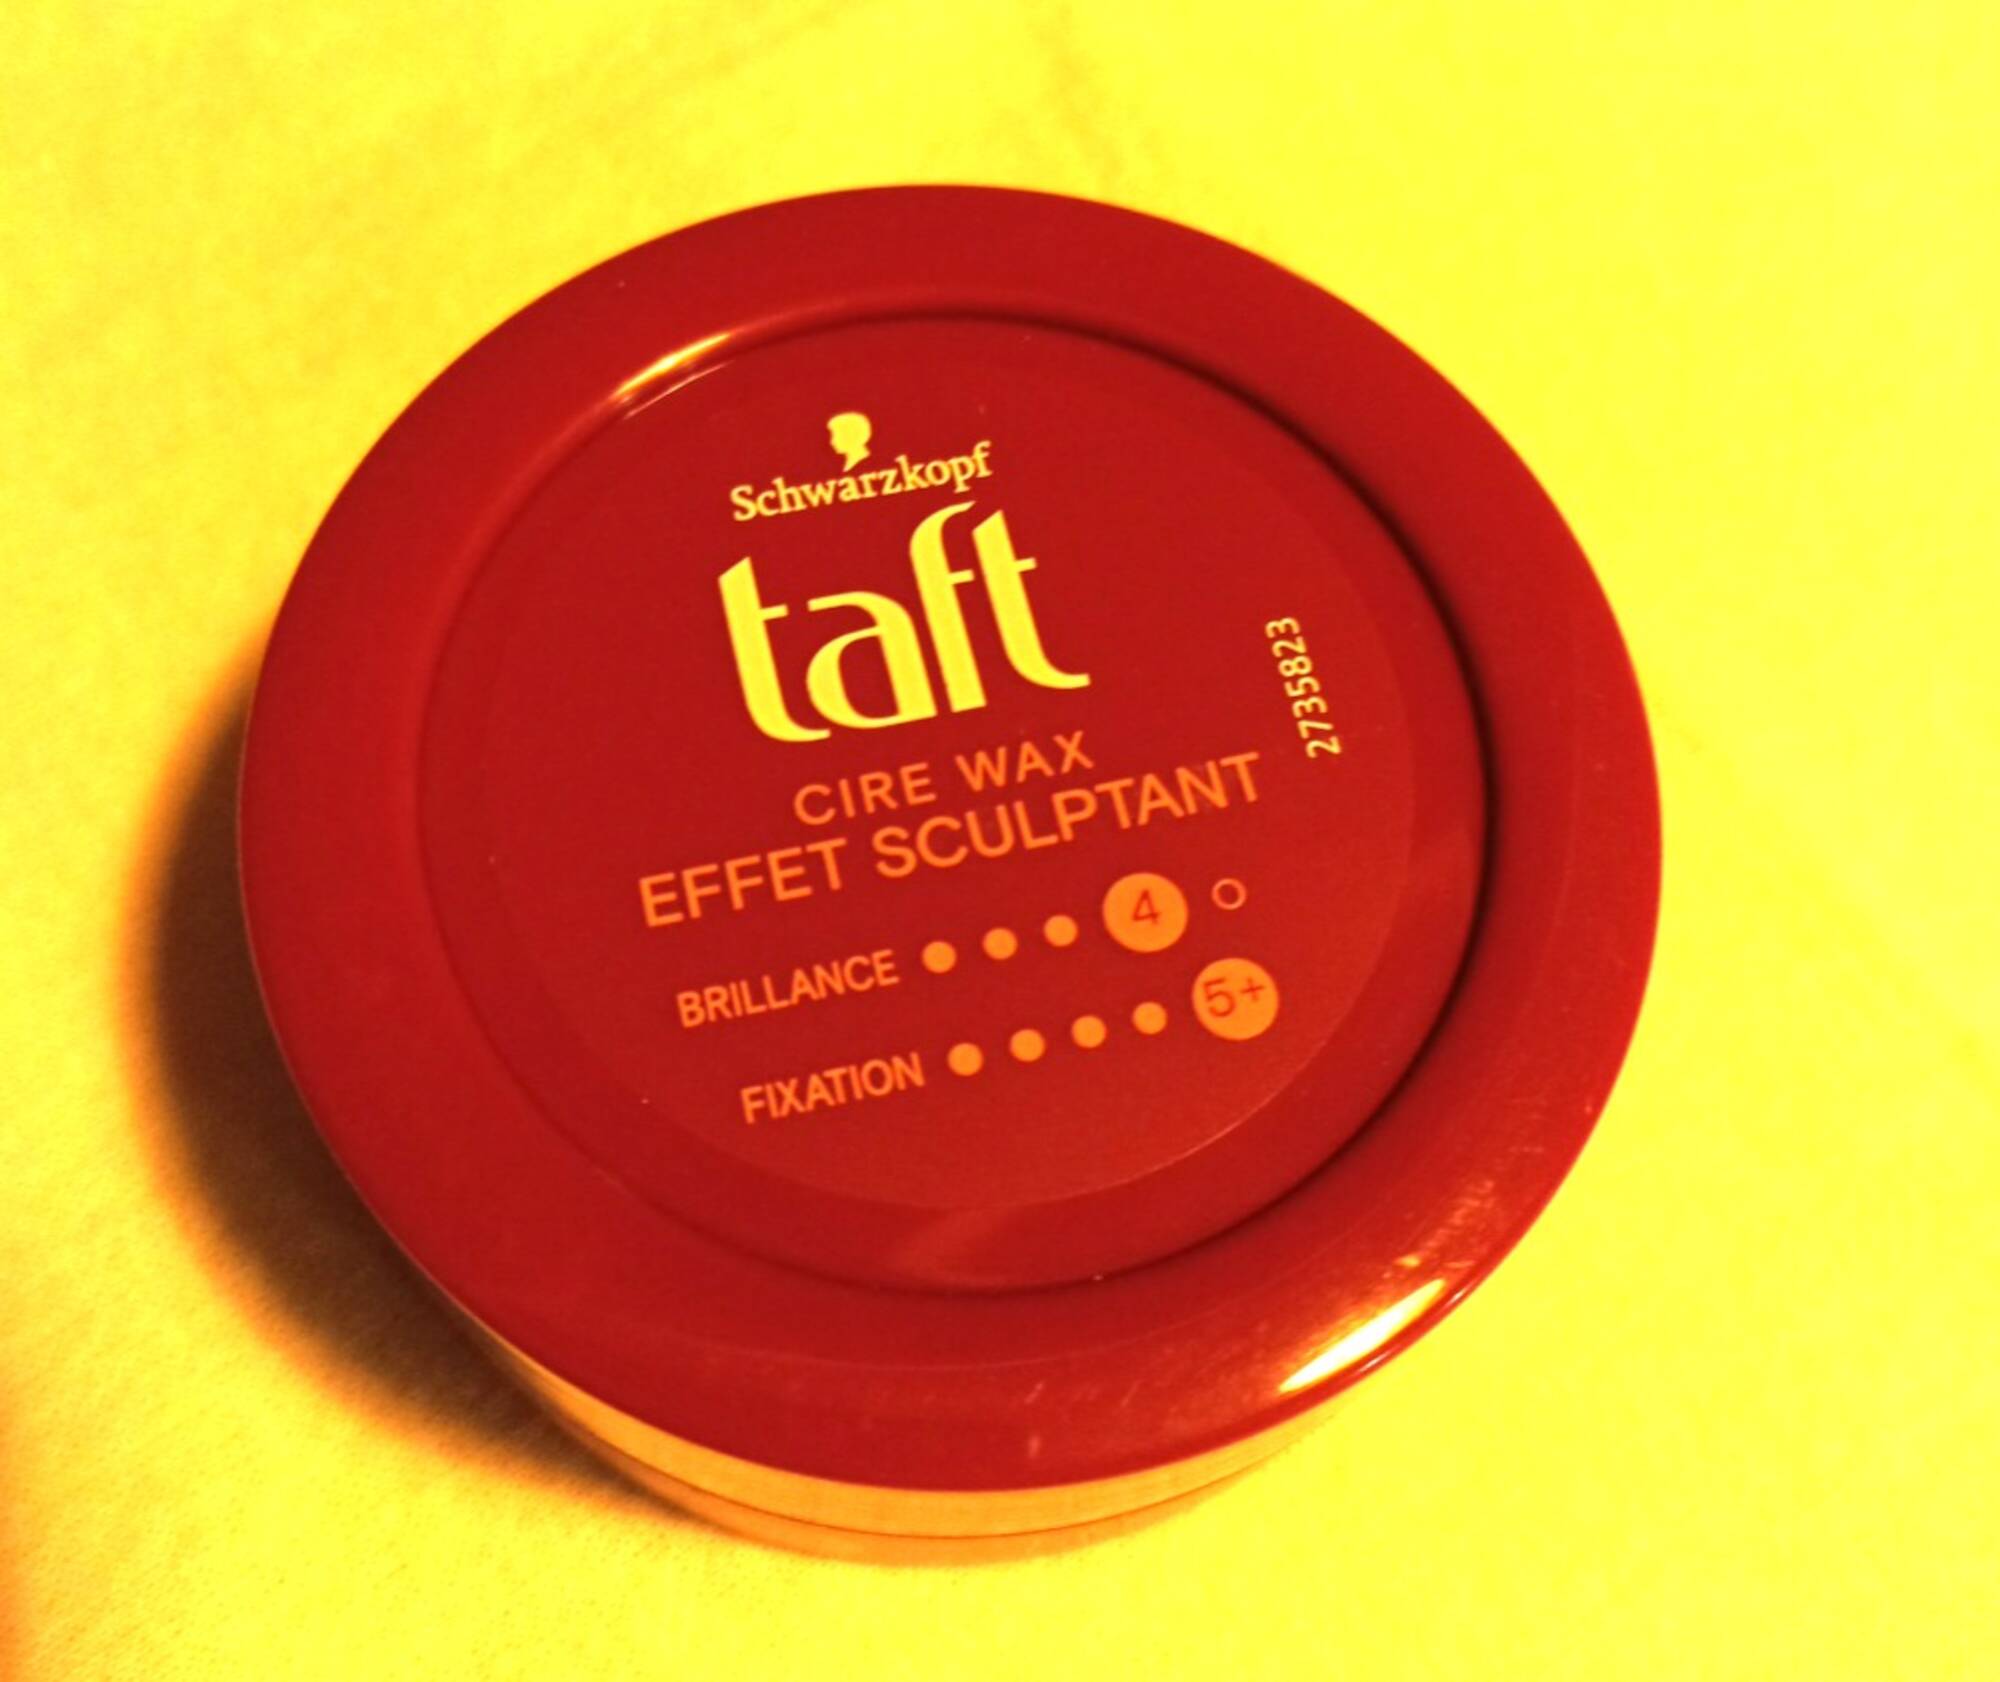 SCHWARZKOPF - Taft - Cire wax effet sculptant